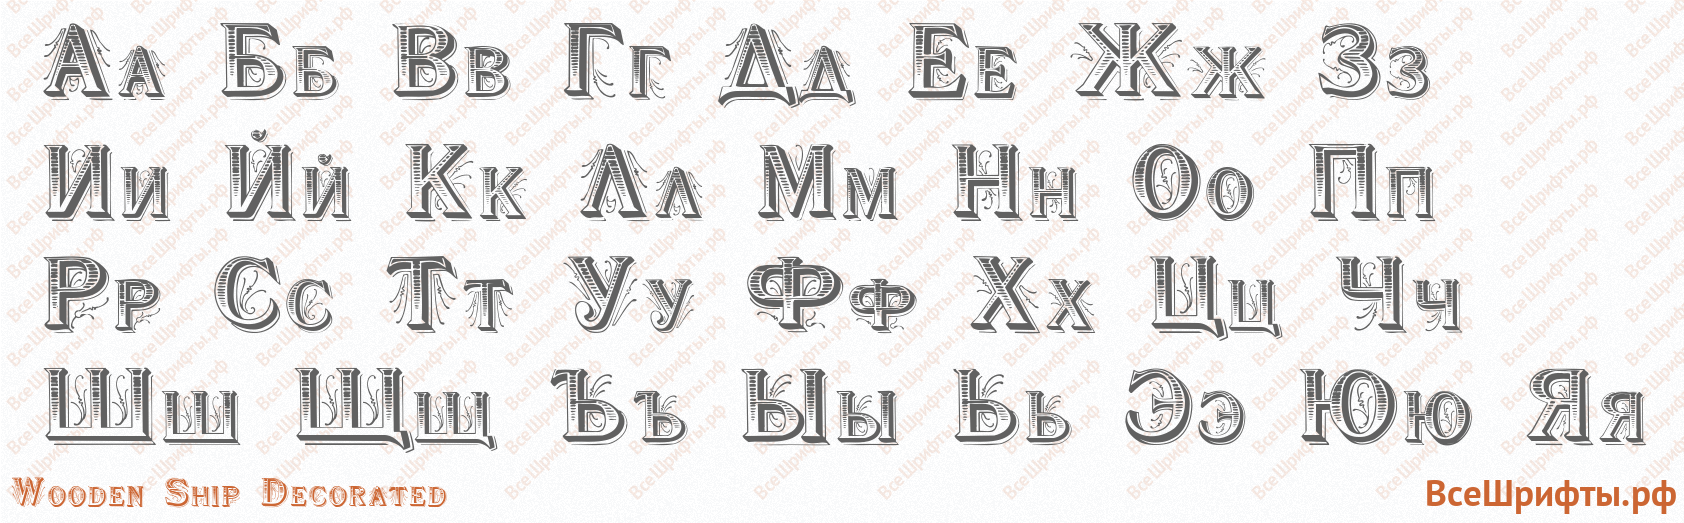 Шрифт Wooden Ship Decorated с русскими буквами